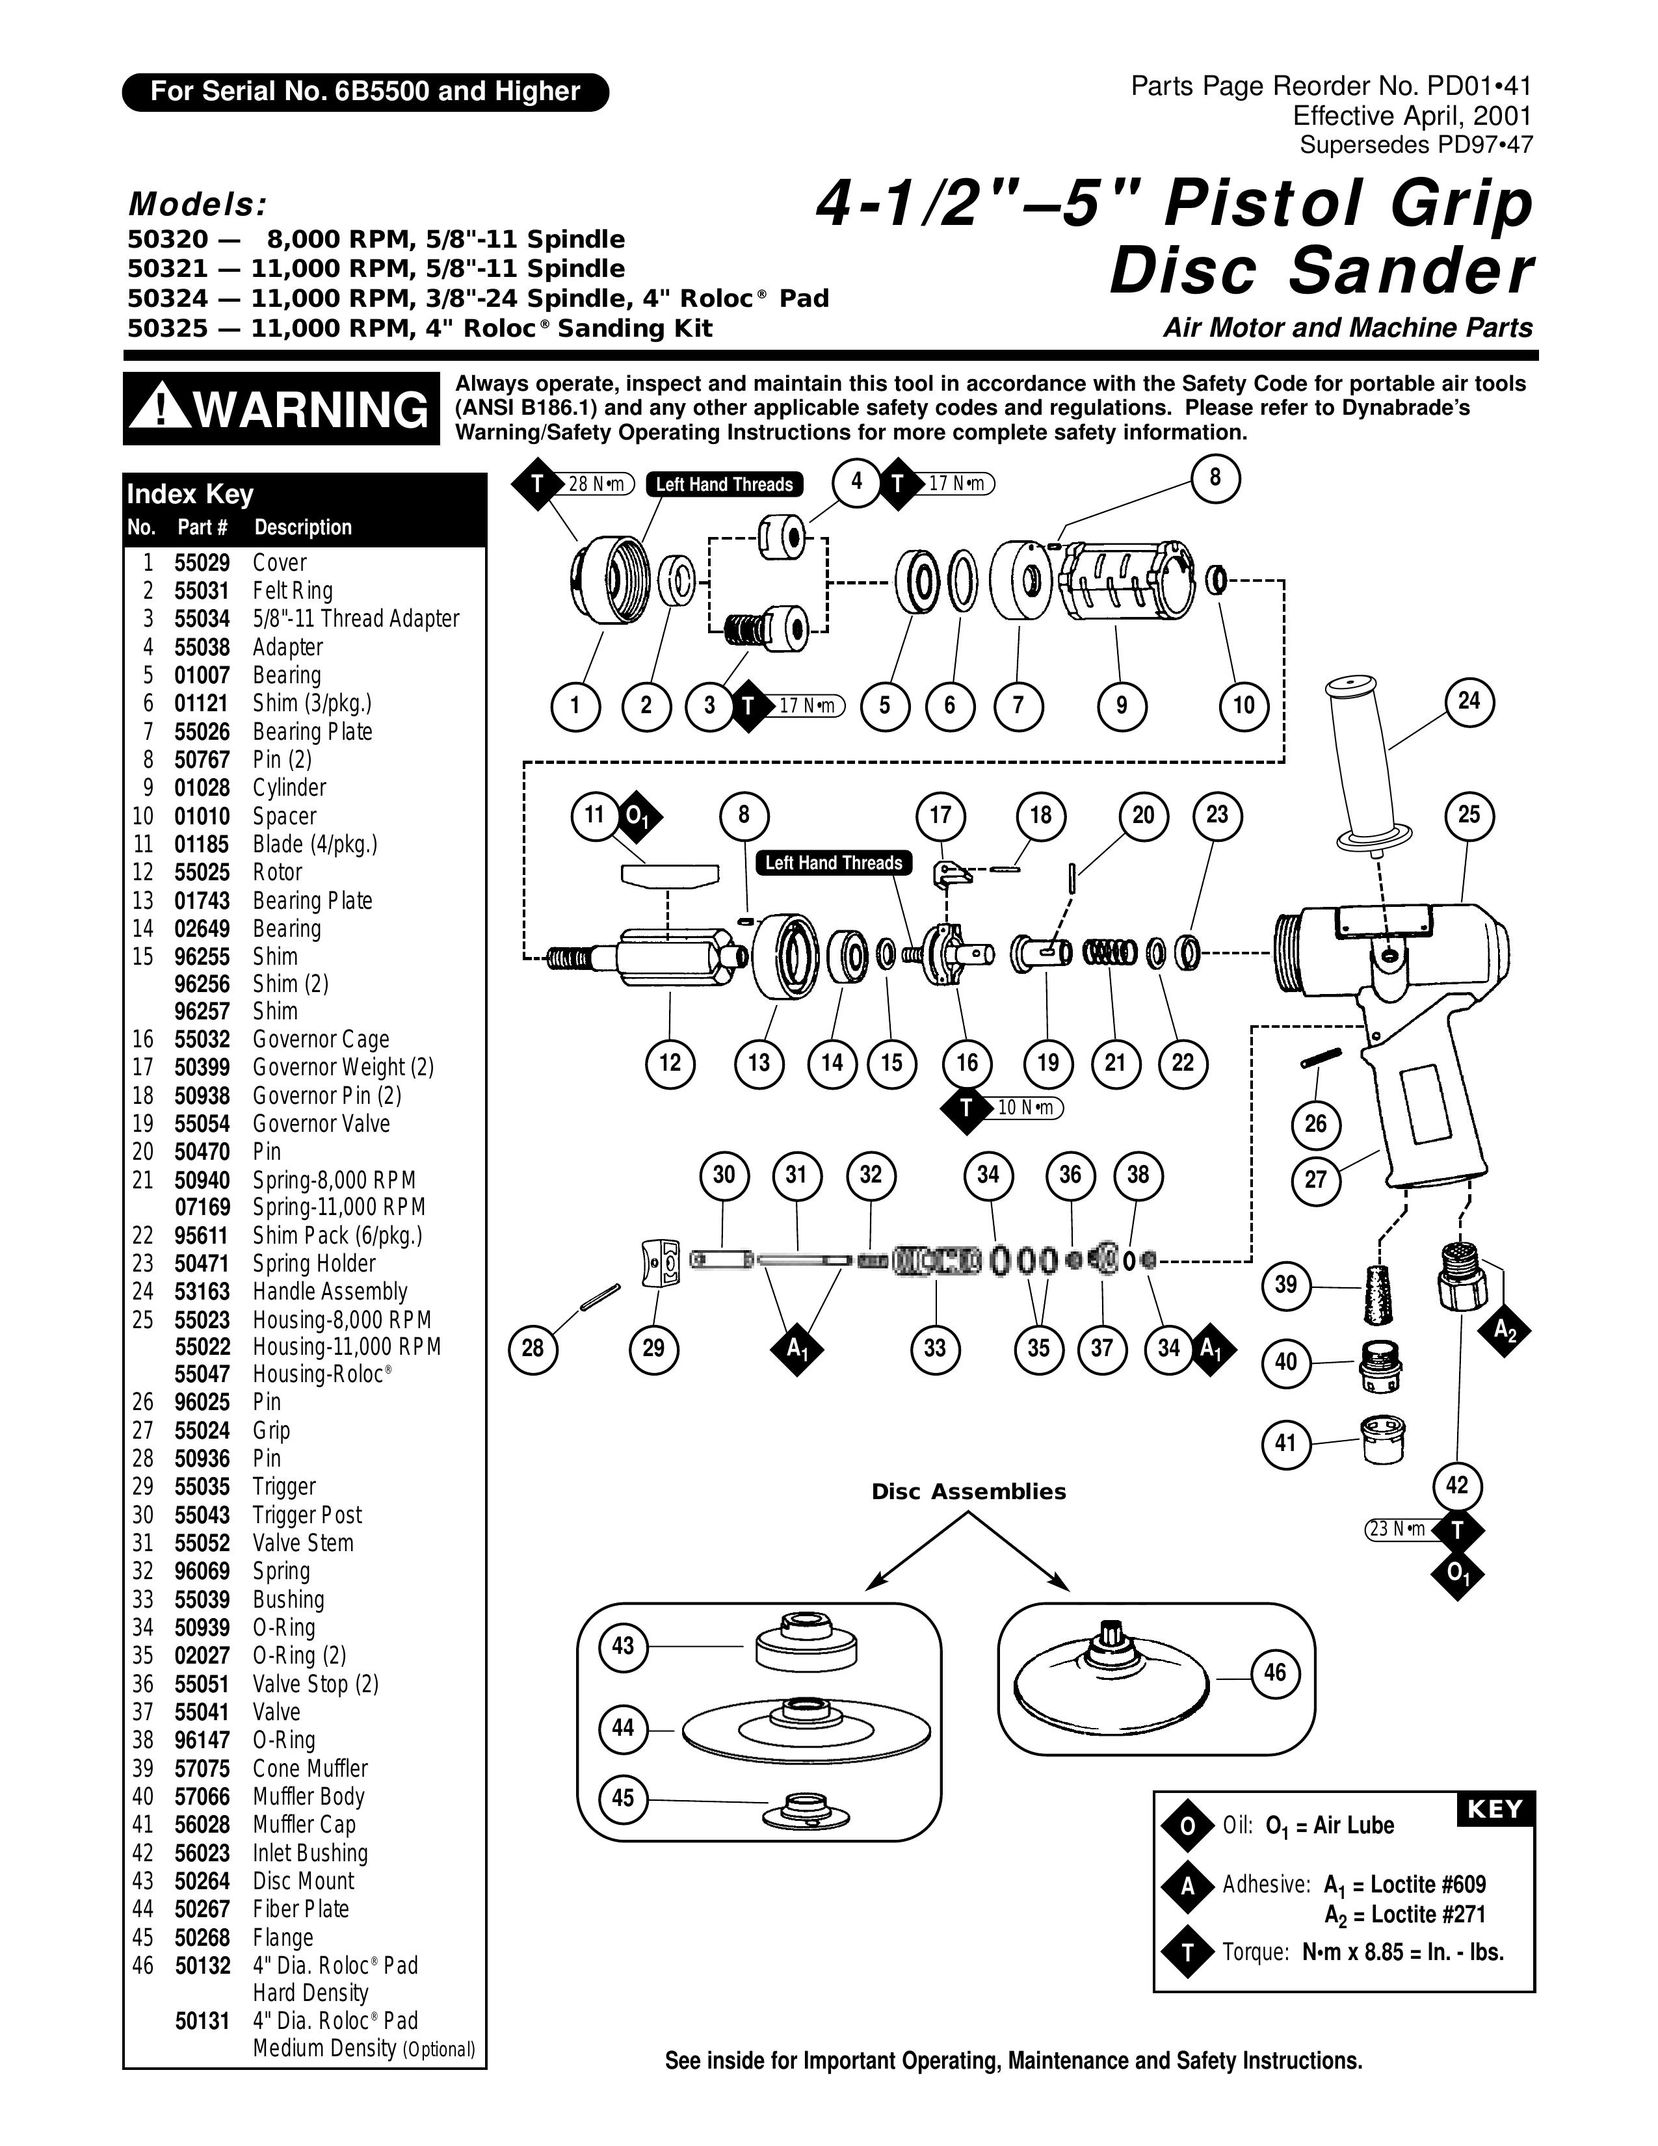 Dynabrade 4" Roloc Pad Cordless Sander User Manual